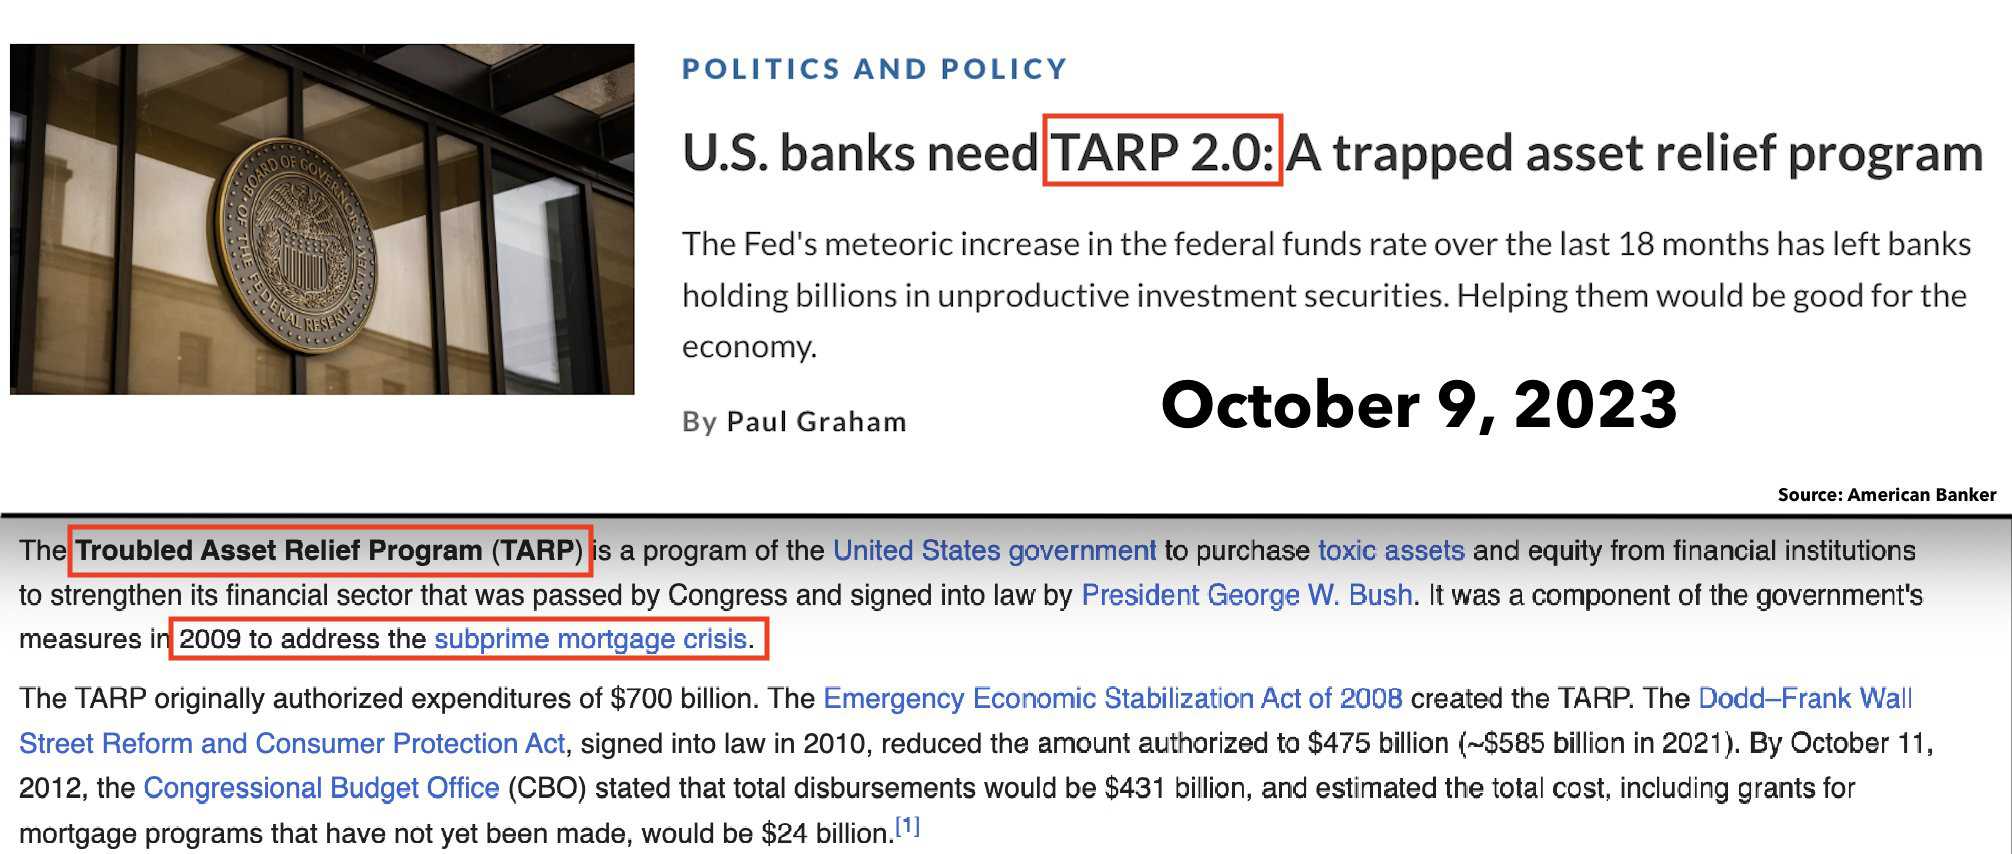 TARP2.0-trapped-asset-relief-program